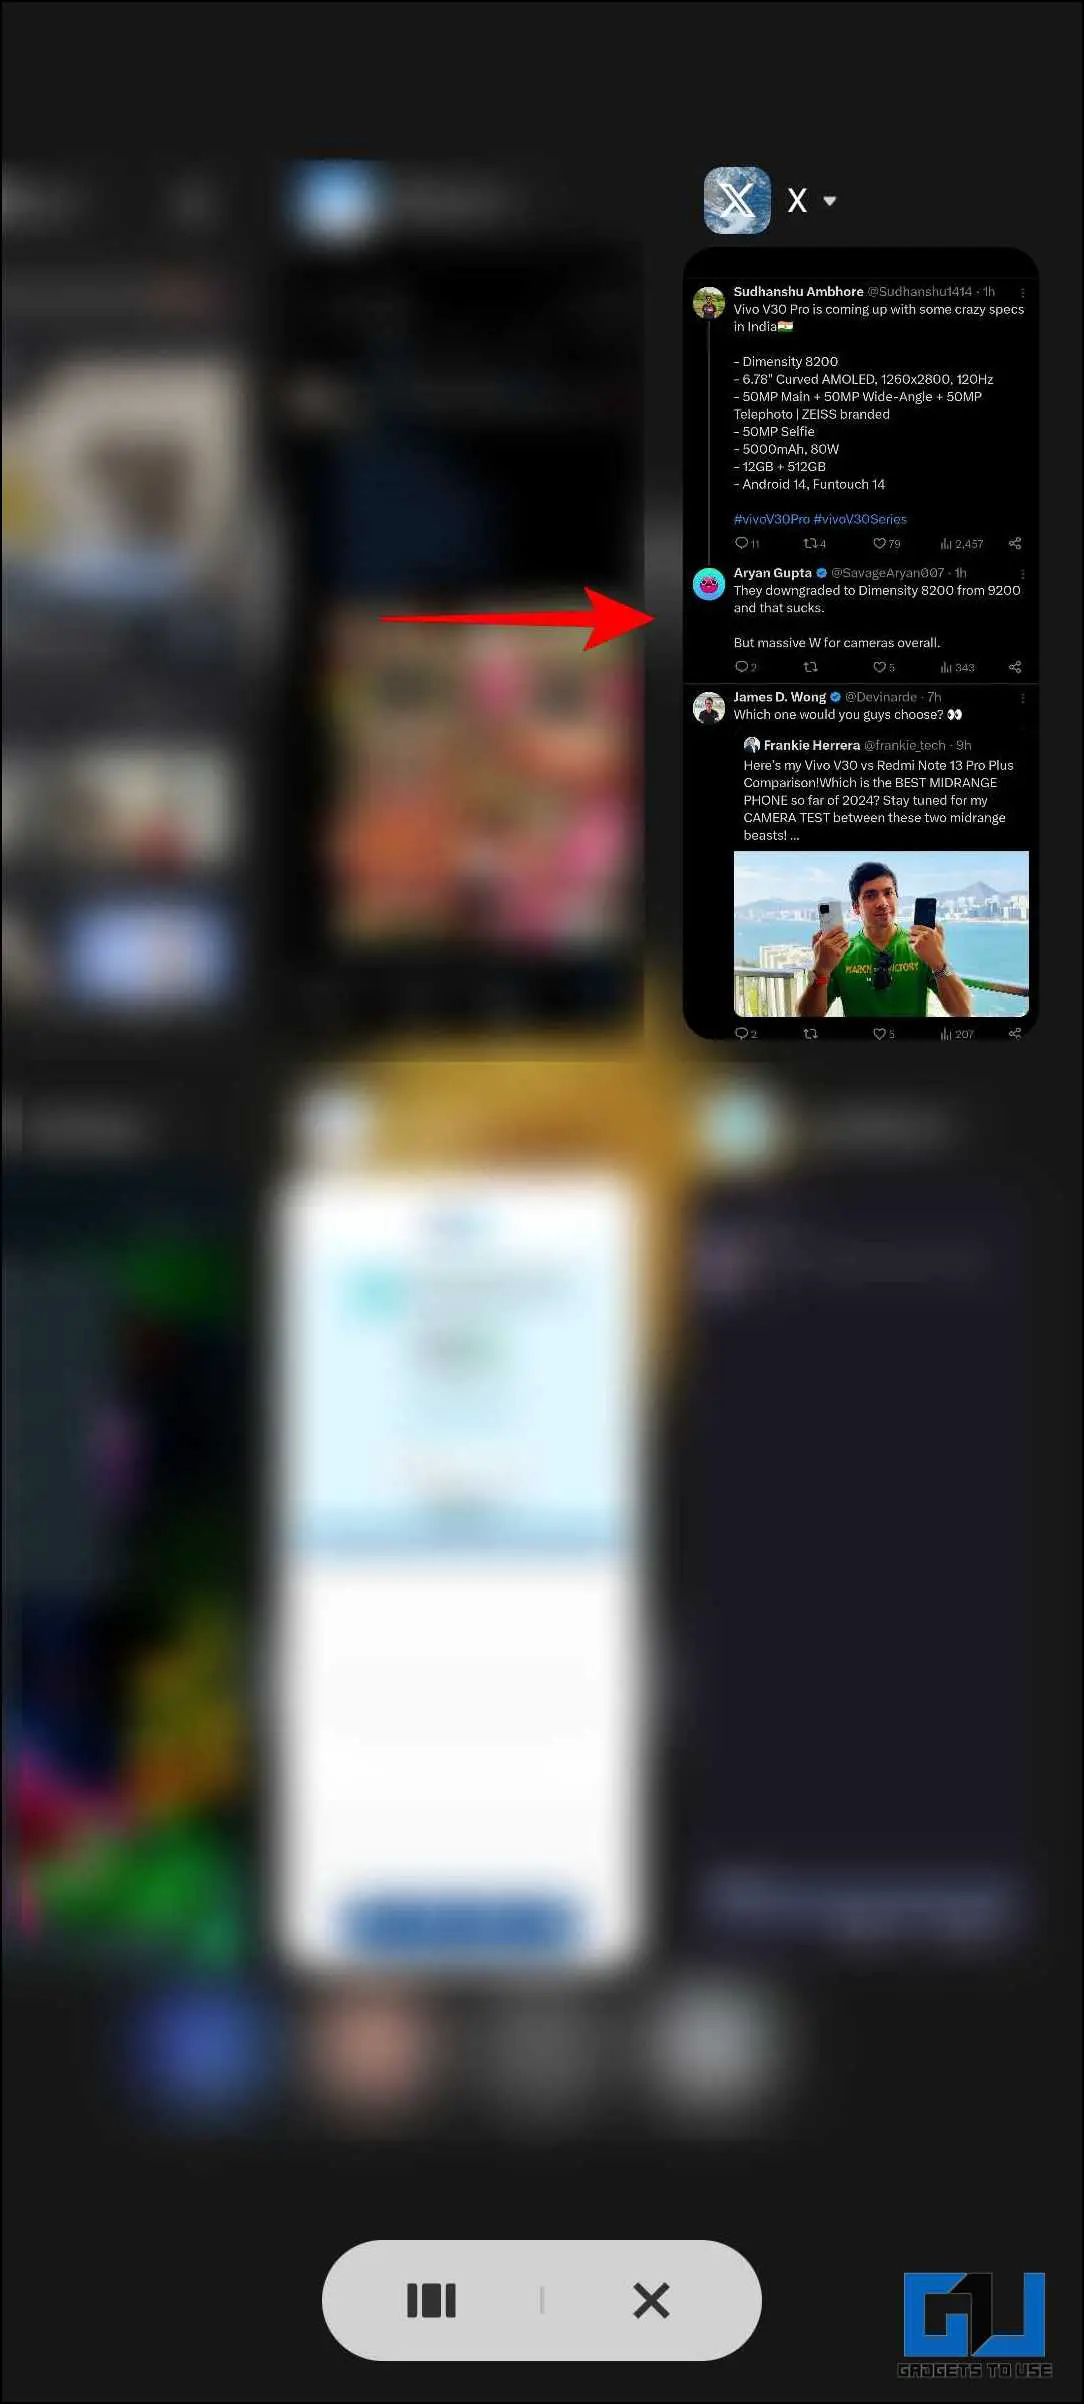 X 앱이 강조 표시된 iQOO 휴대폰의 최근 앱 창